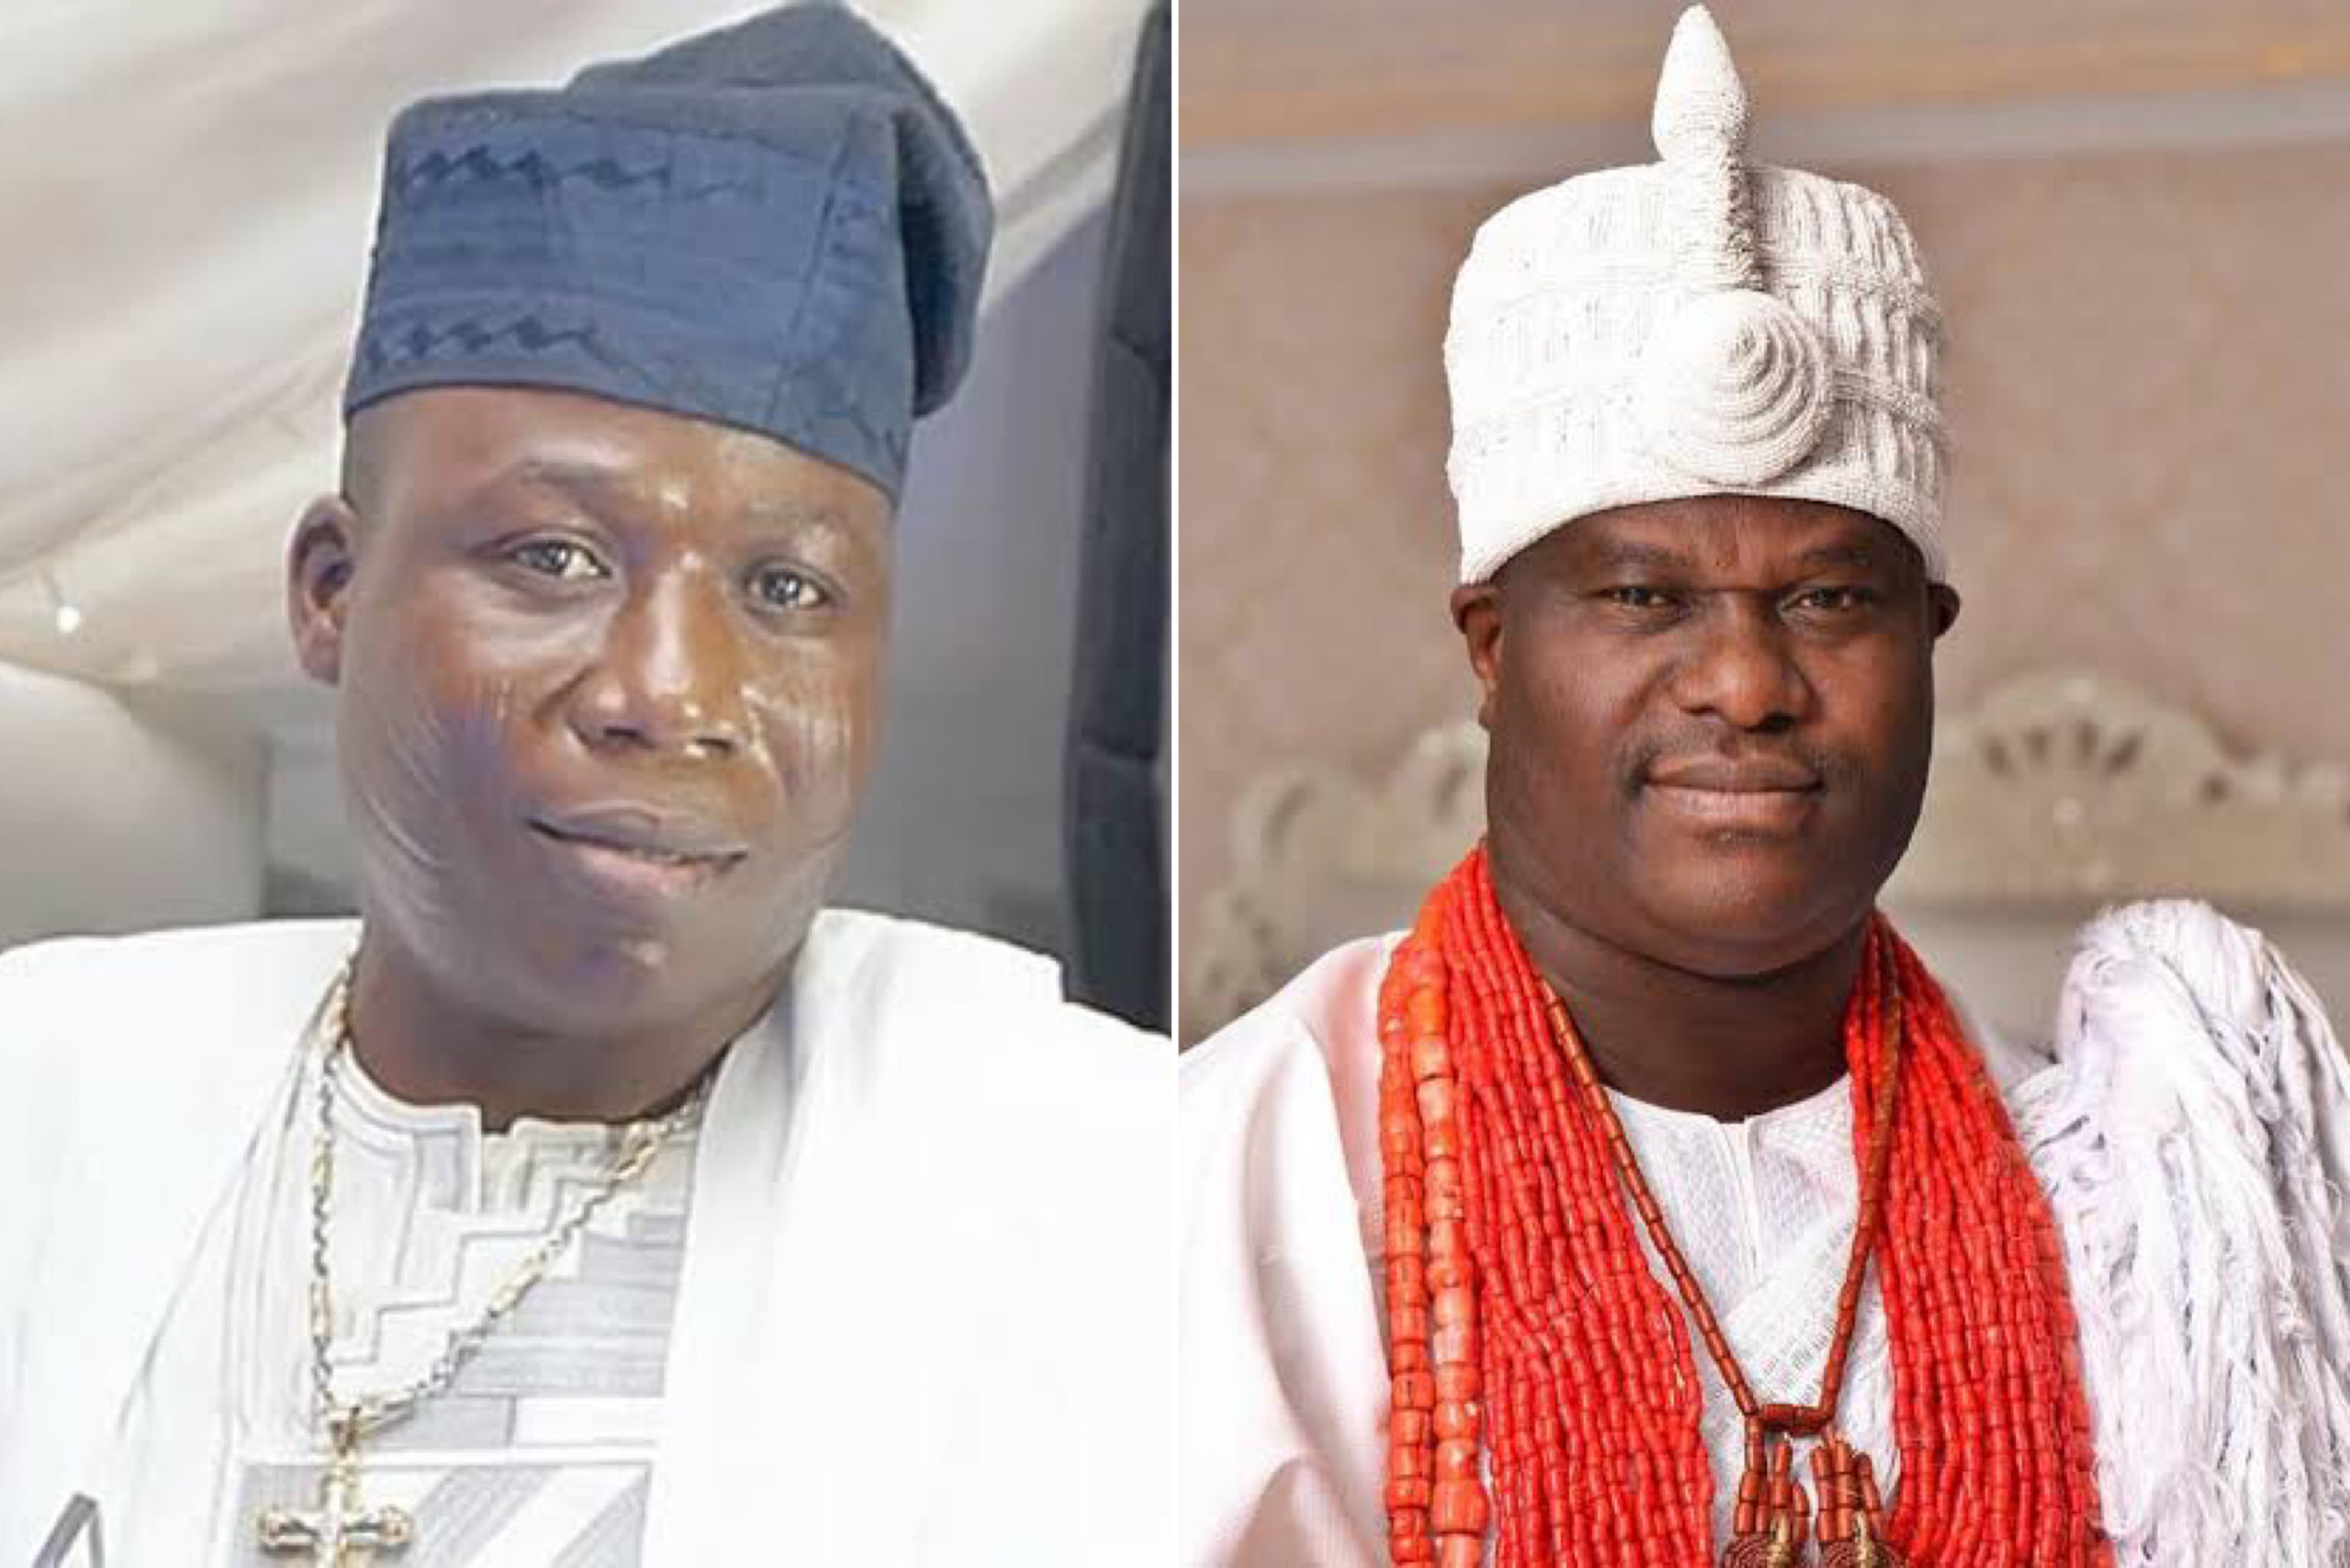 ‘Forgive Me’ - Sunday Igboho Denies Insulting Ooni Of Ife, Asks For Forgiveness